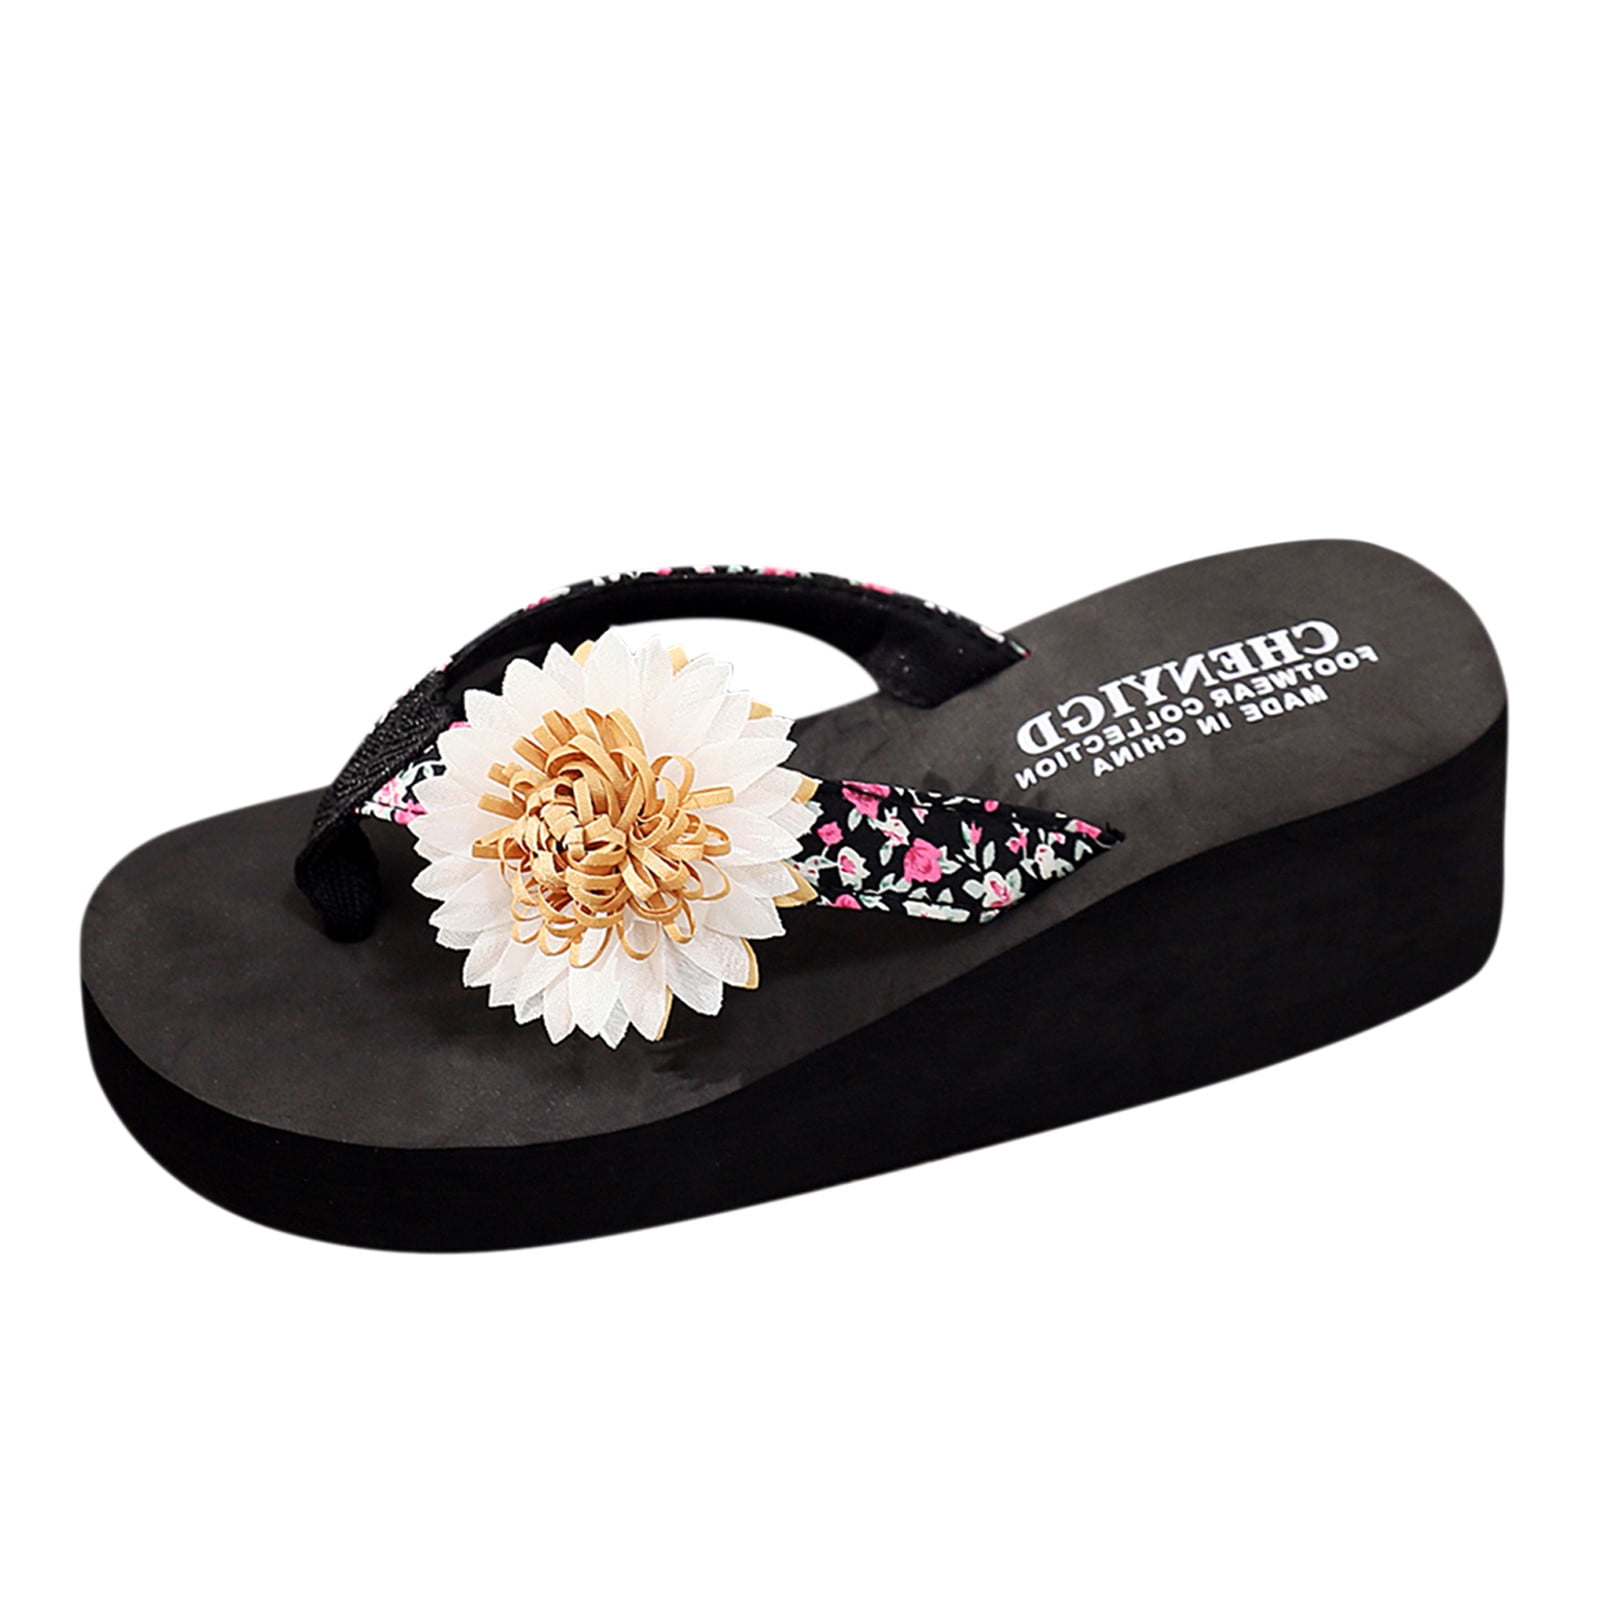  GlobalHandmade, Bohemia Women Flat flat flip flop Sandals  Summer Beach Shoes, Multicolored, Black US Size 5-13 : Handmade Products